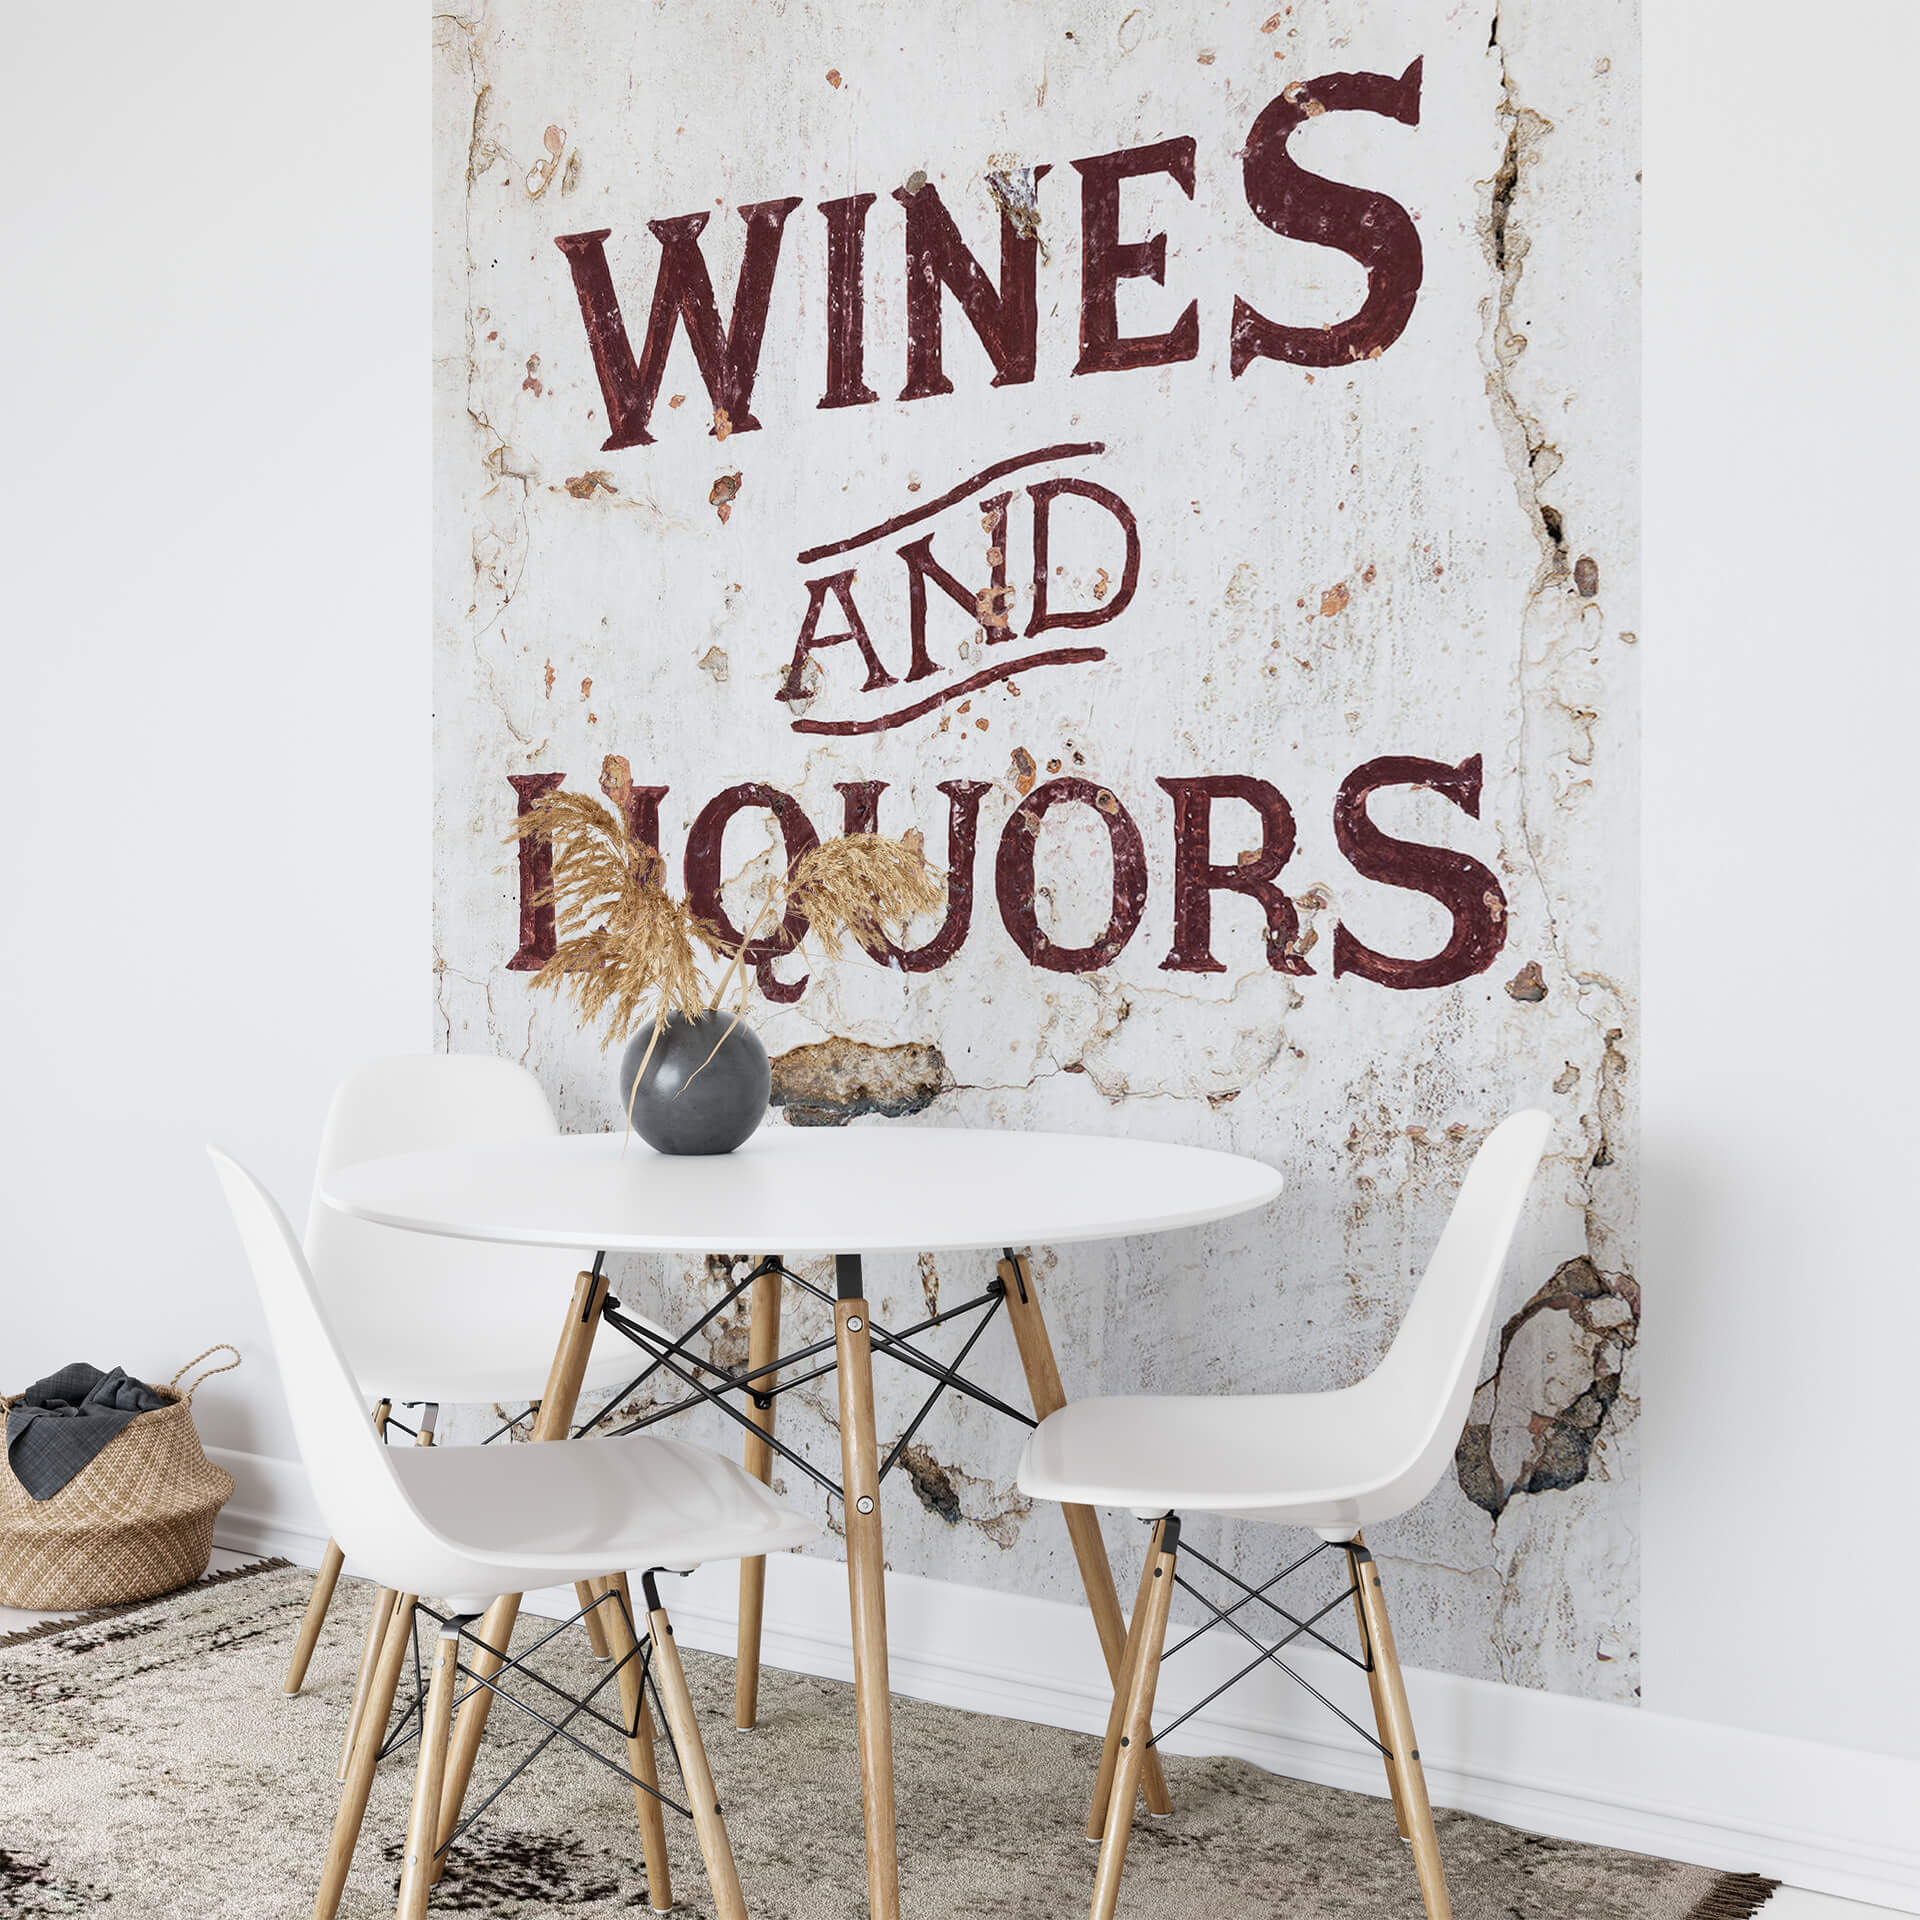 Fototapete Wines and Liquors 1,92 x 2,6 m